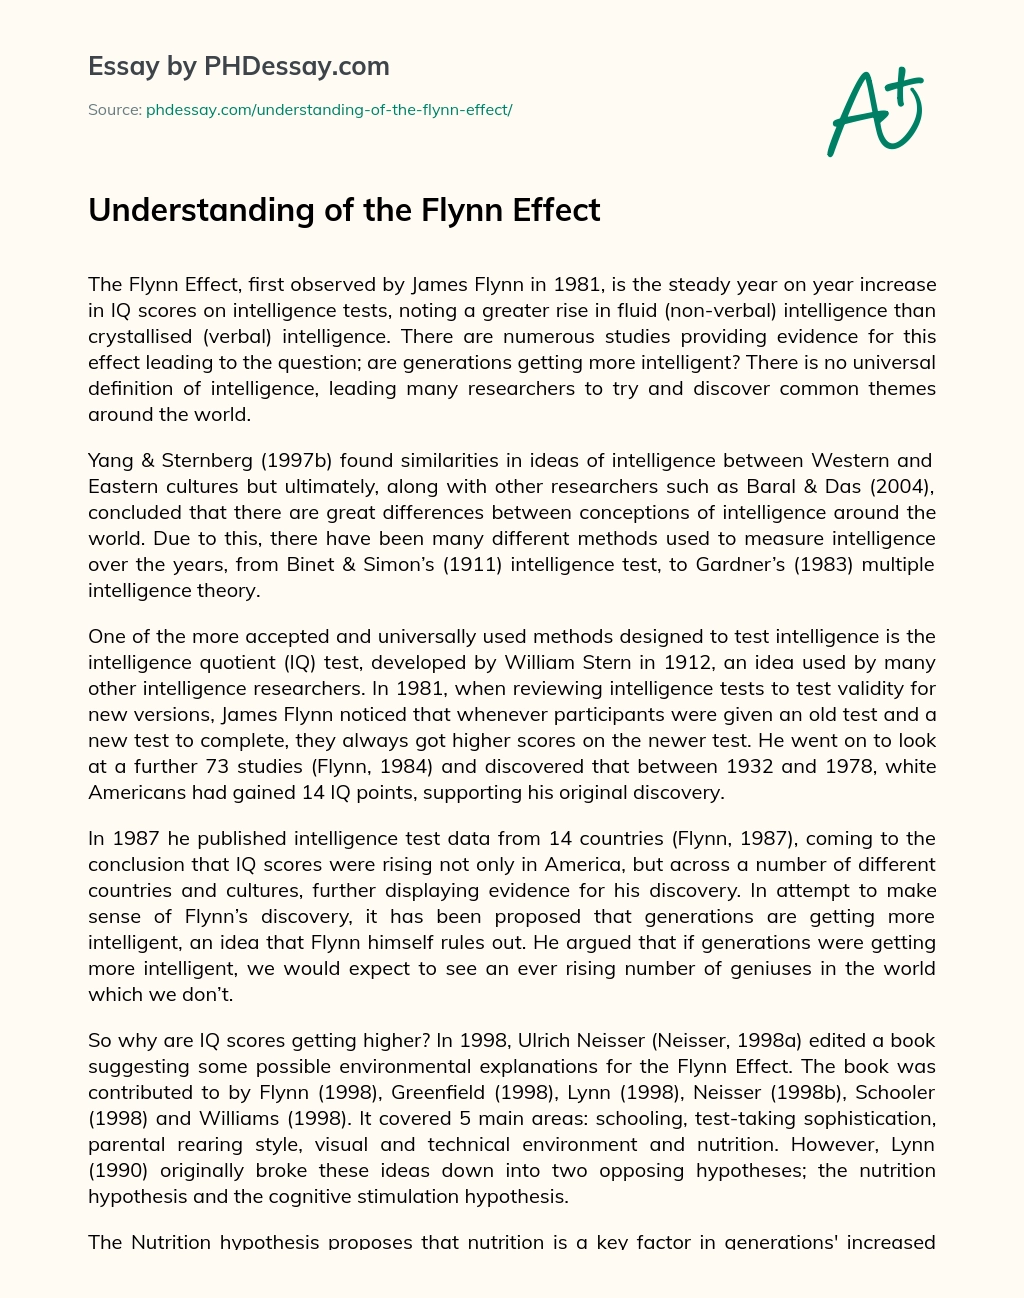 Understanding of the Flynn Effect essay